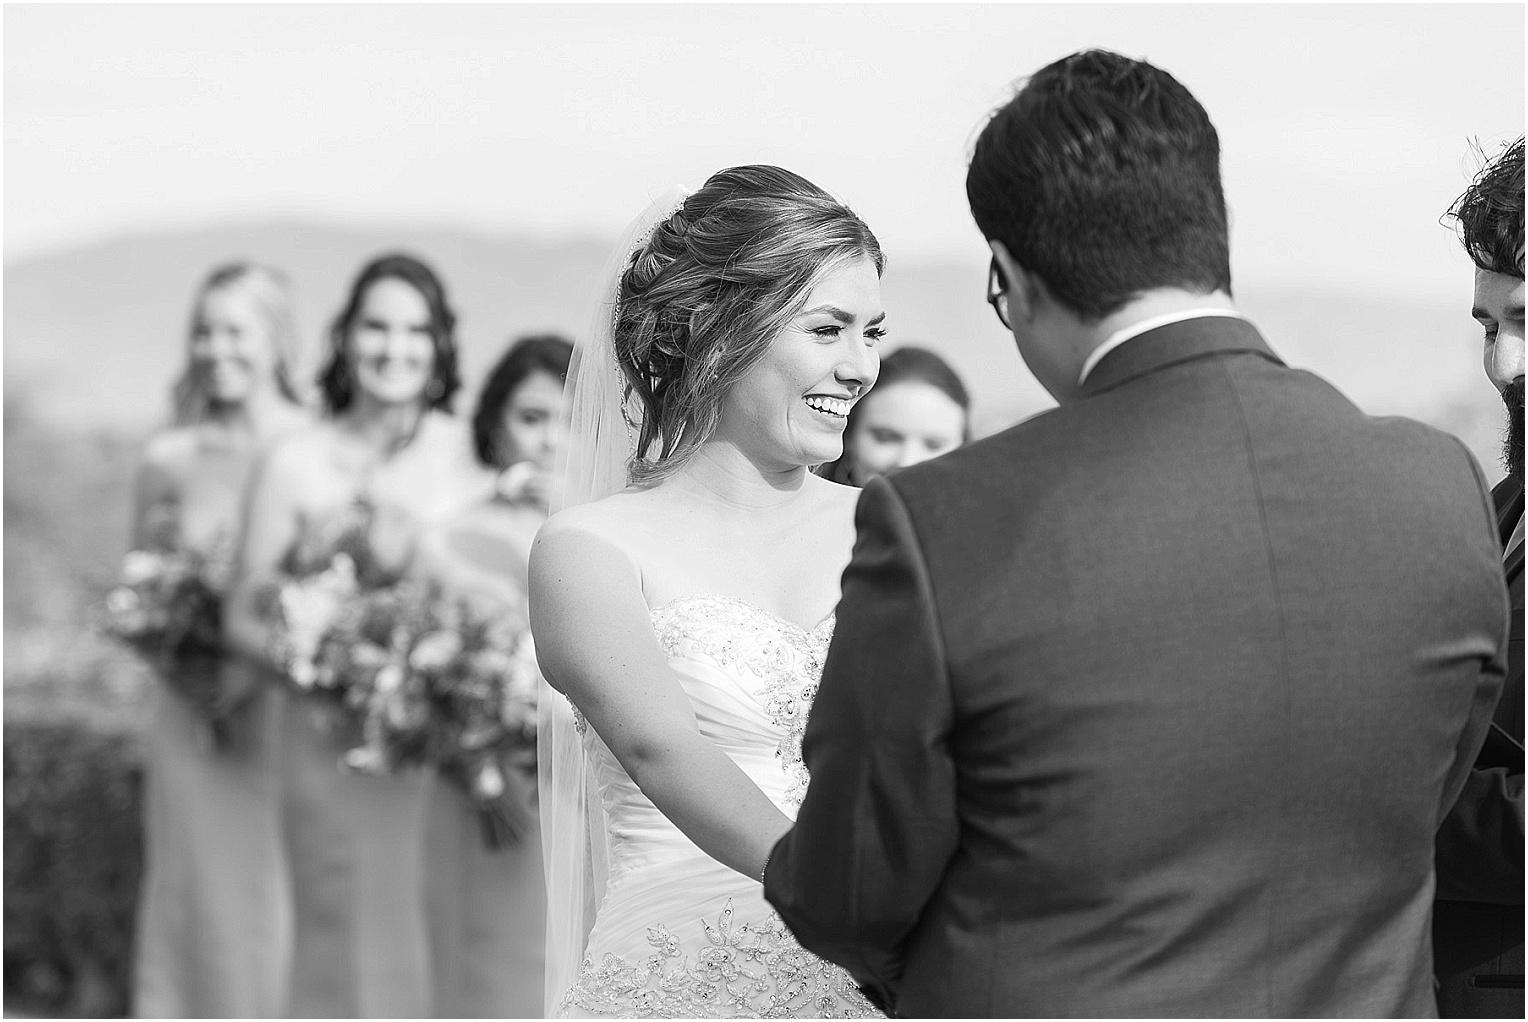 Skyline Country Club Wedding Tucson Photographer Kristina and Eric ceremony